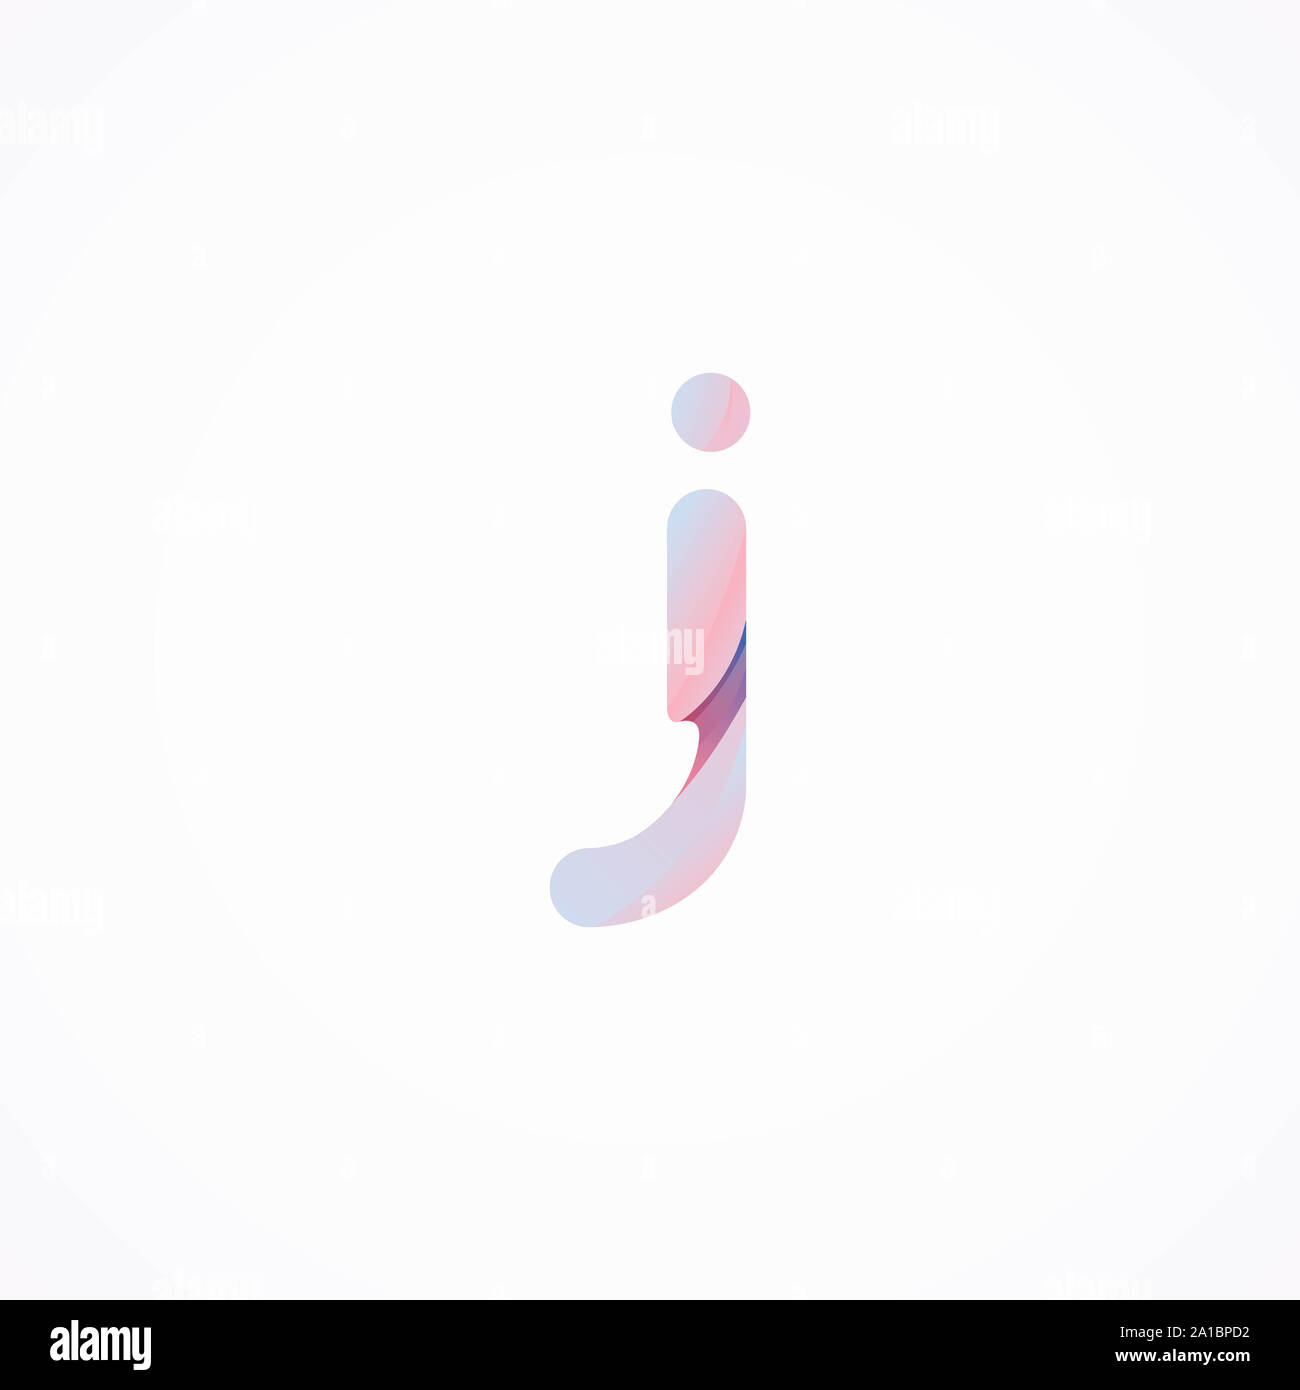 infinity j Letter Logo design template Stock Photo